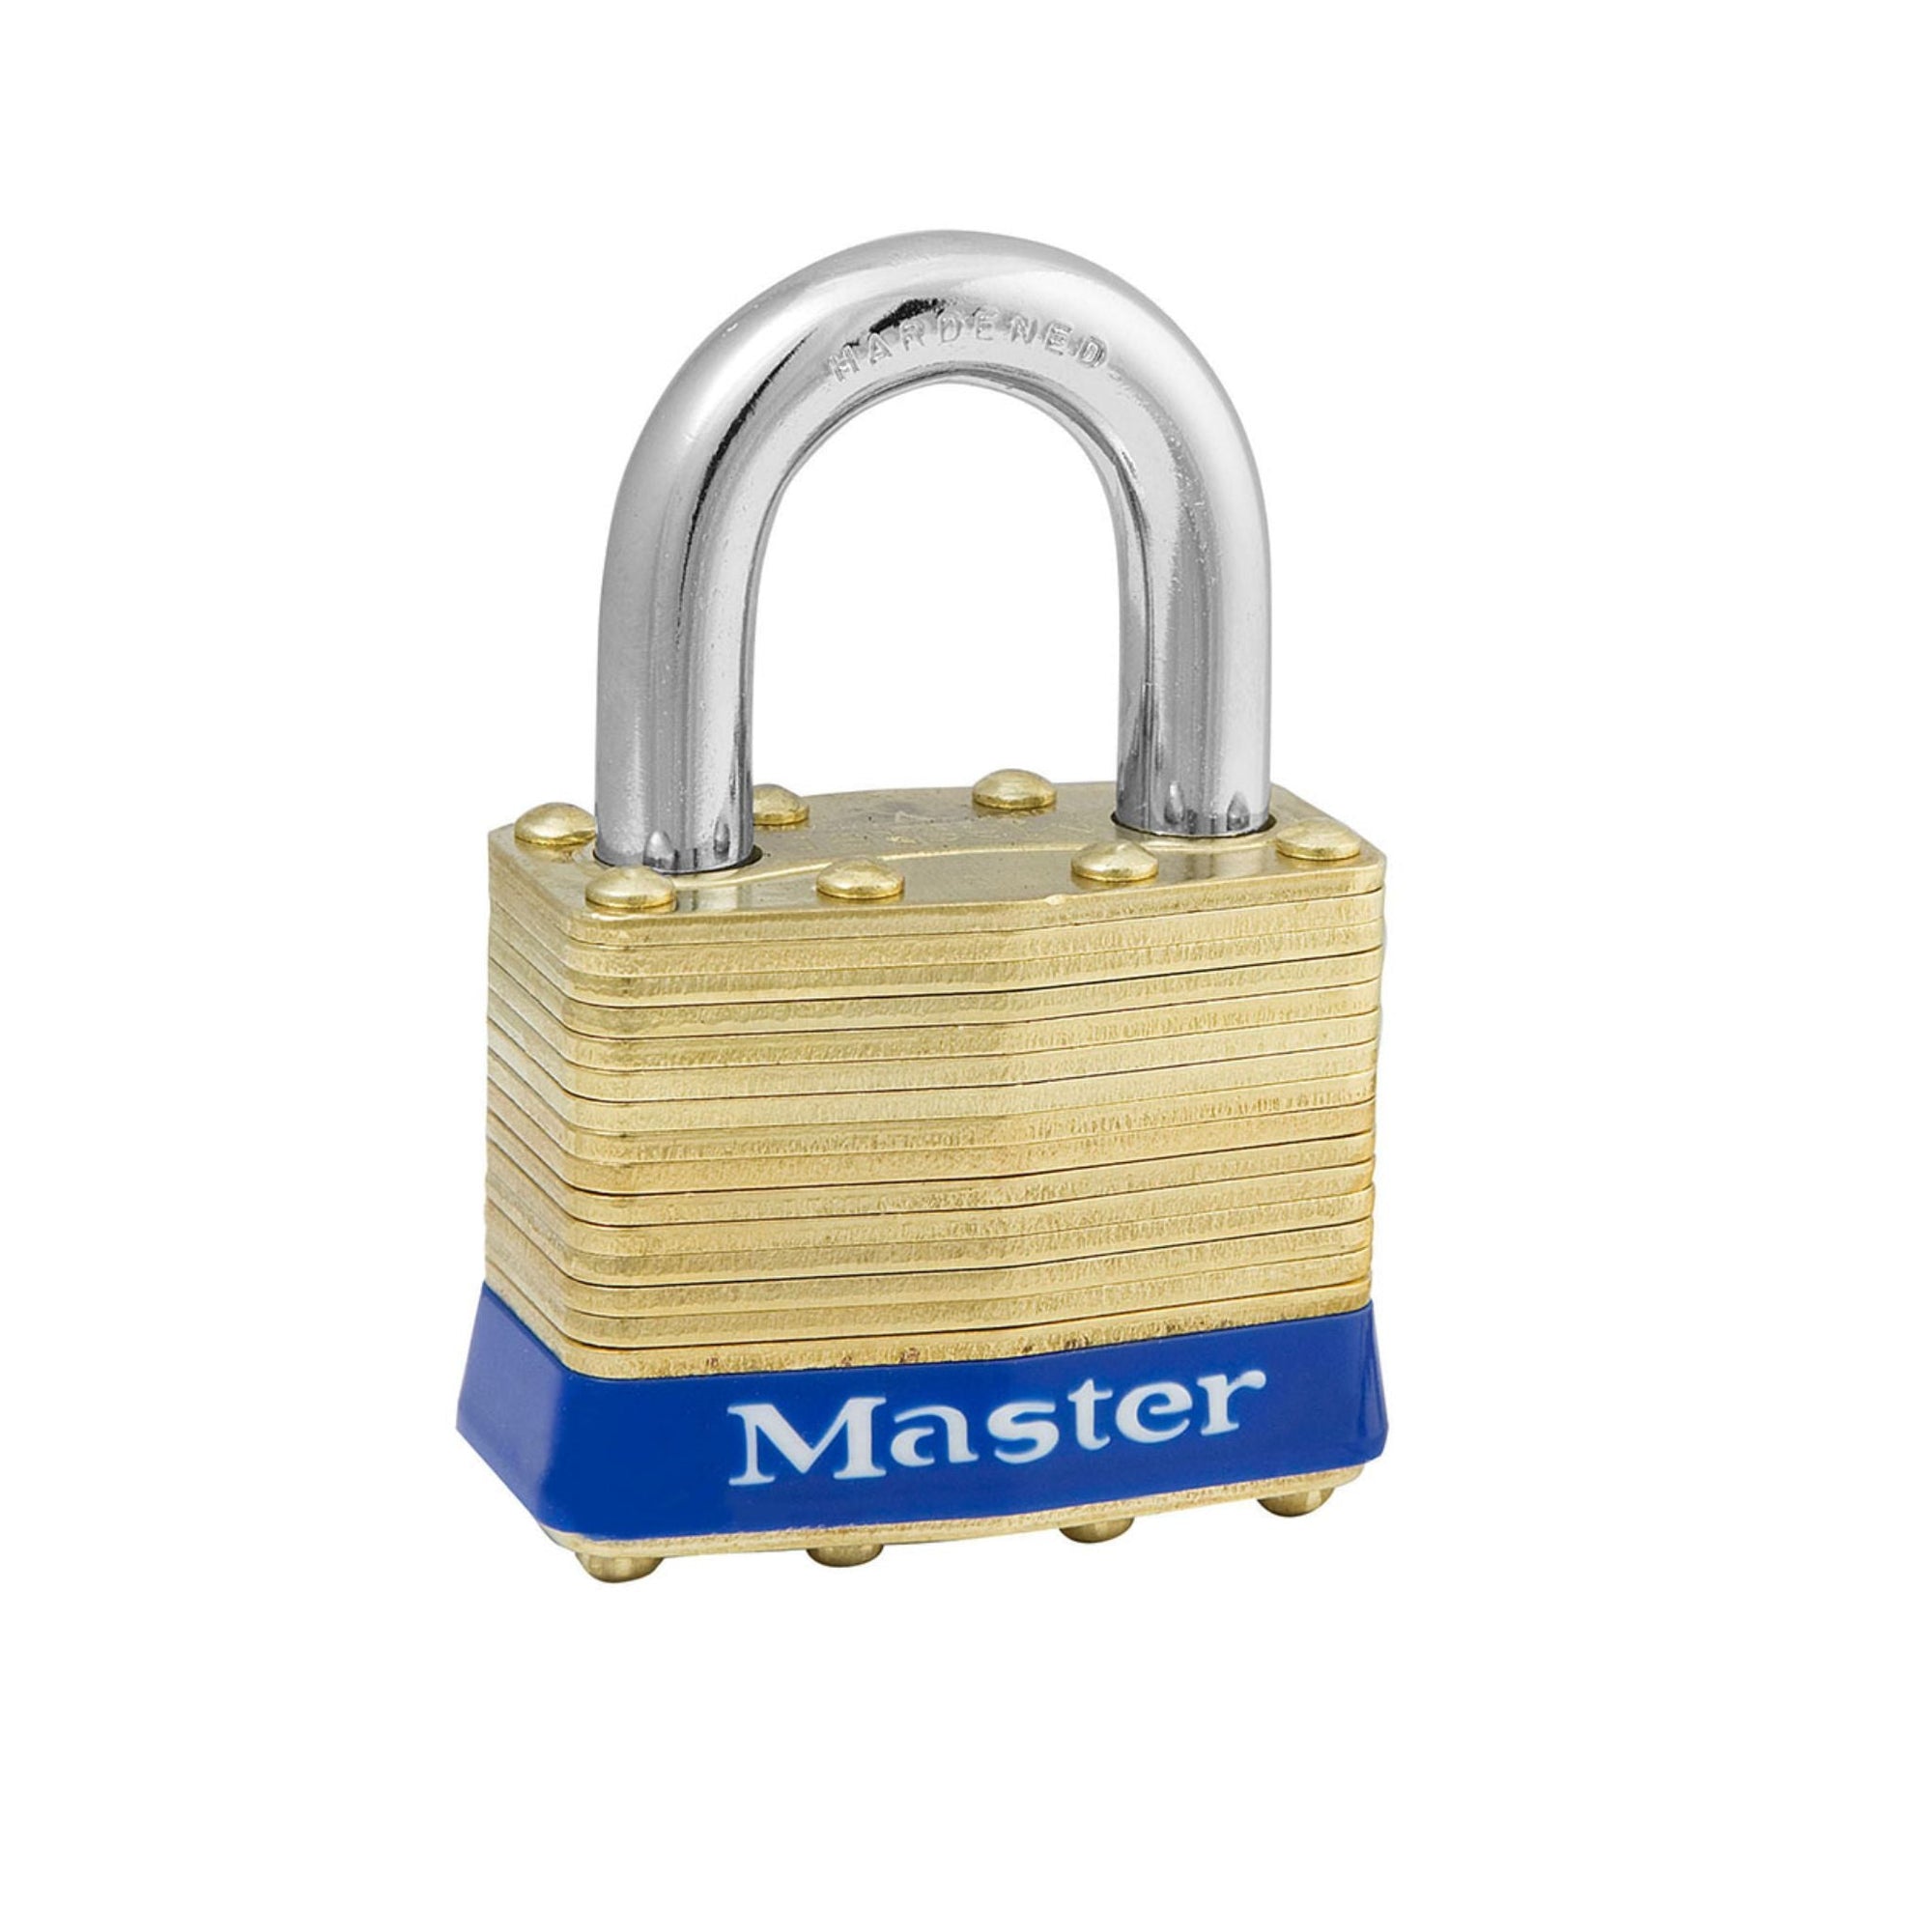 Master Lock 2KA 0315 Lock Laminated brass No. 2 Series Padlock Keyed to Match Existing Key Number KA0315 - The Lock Source